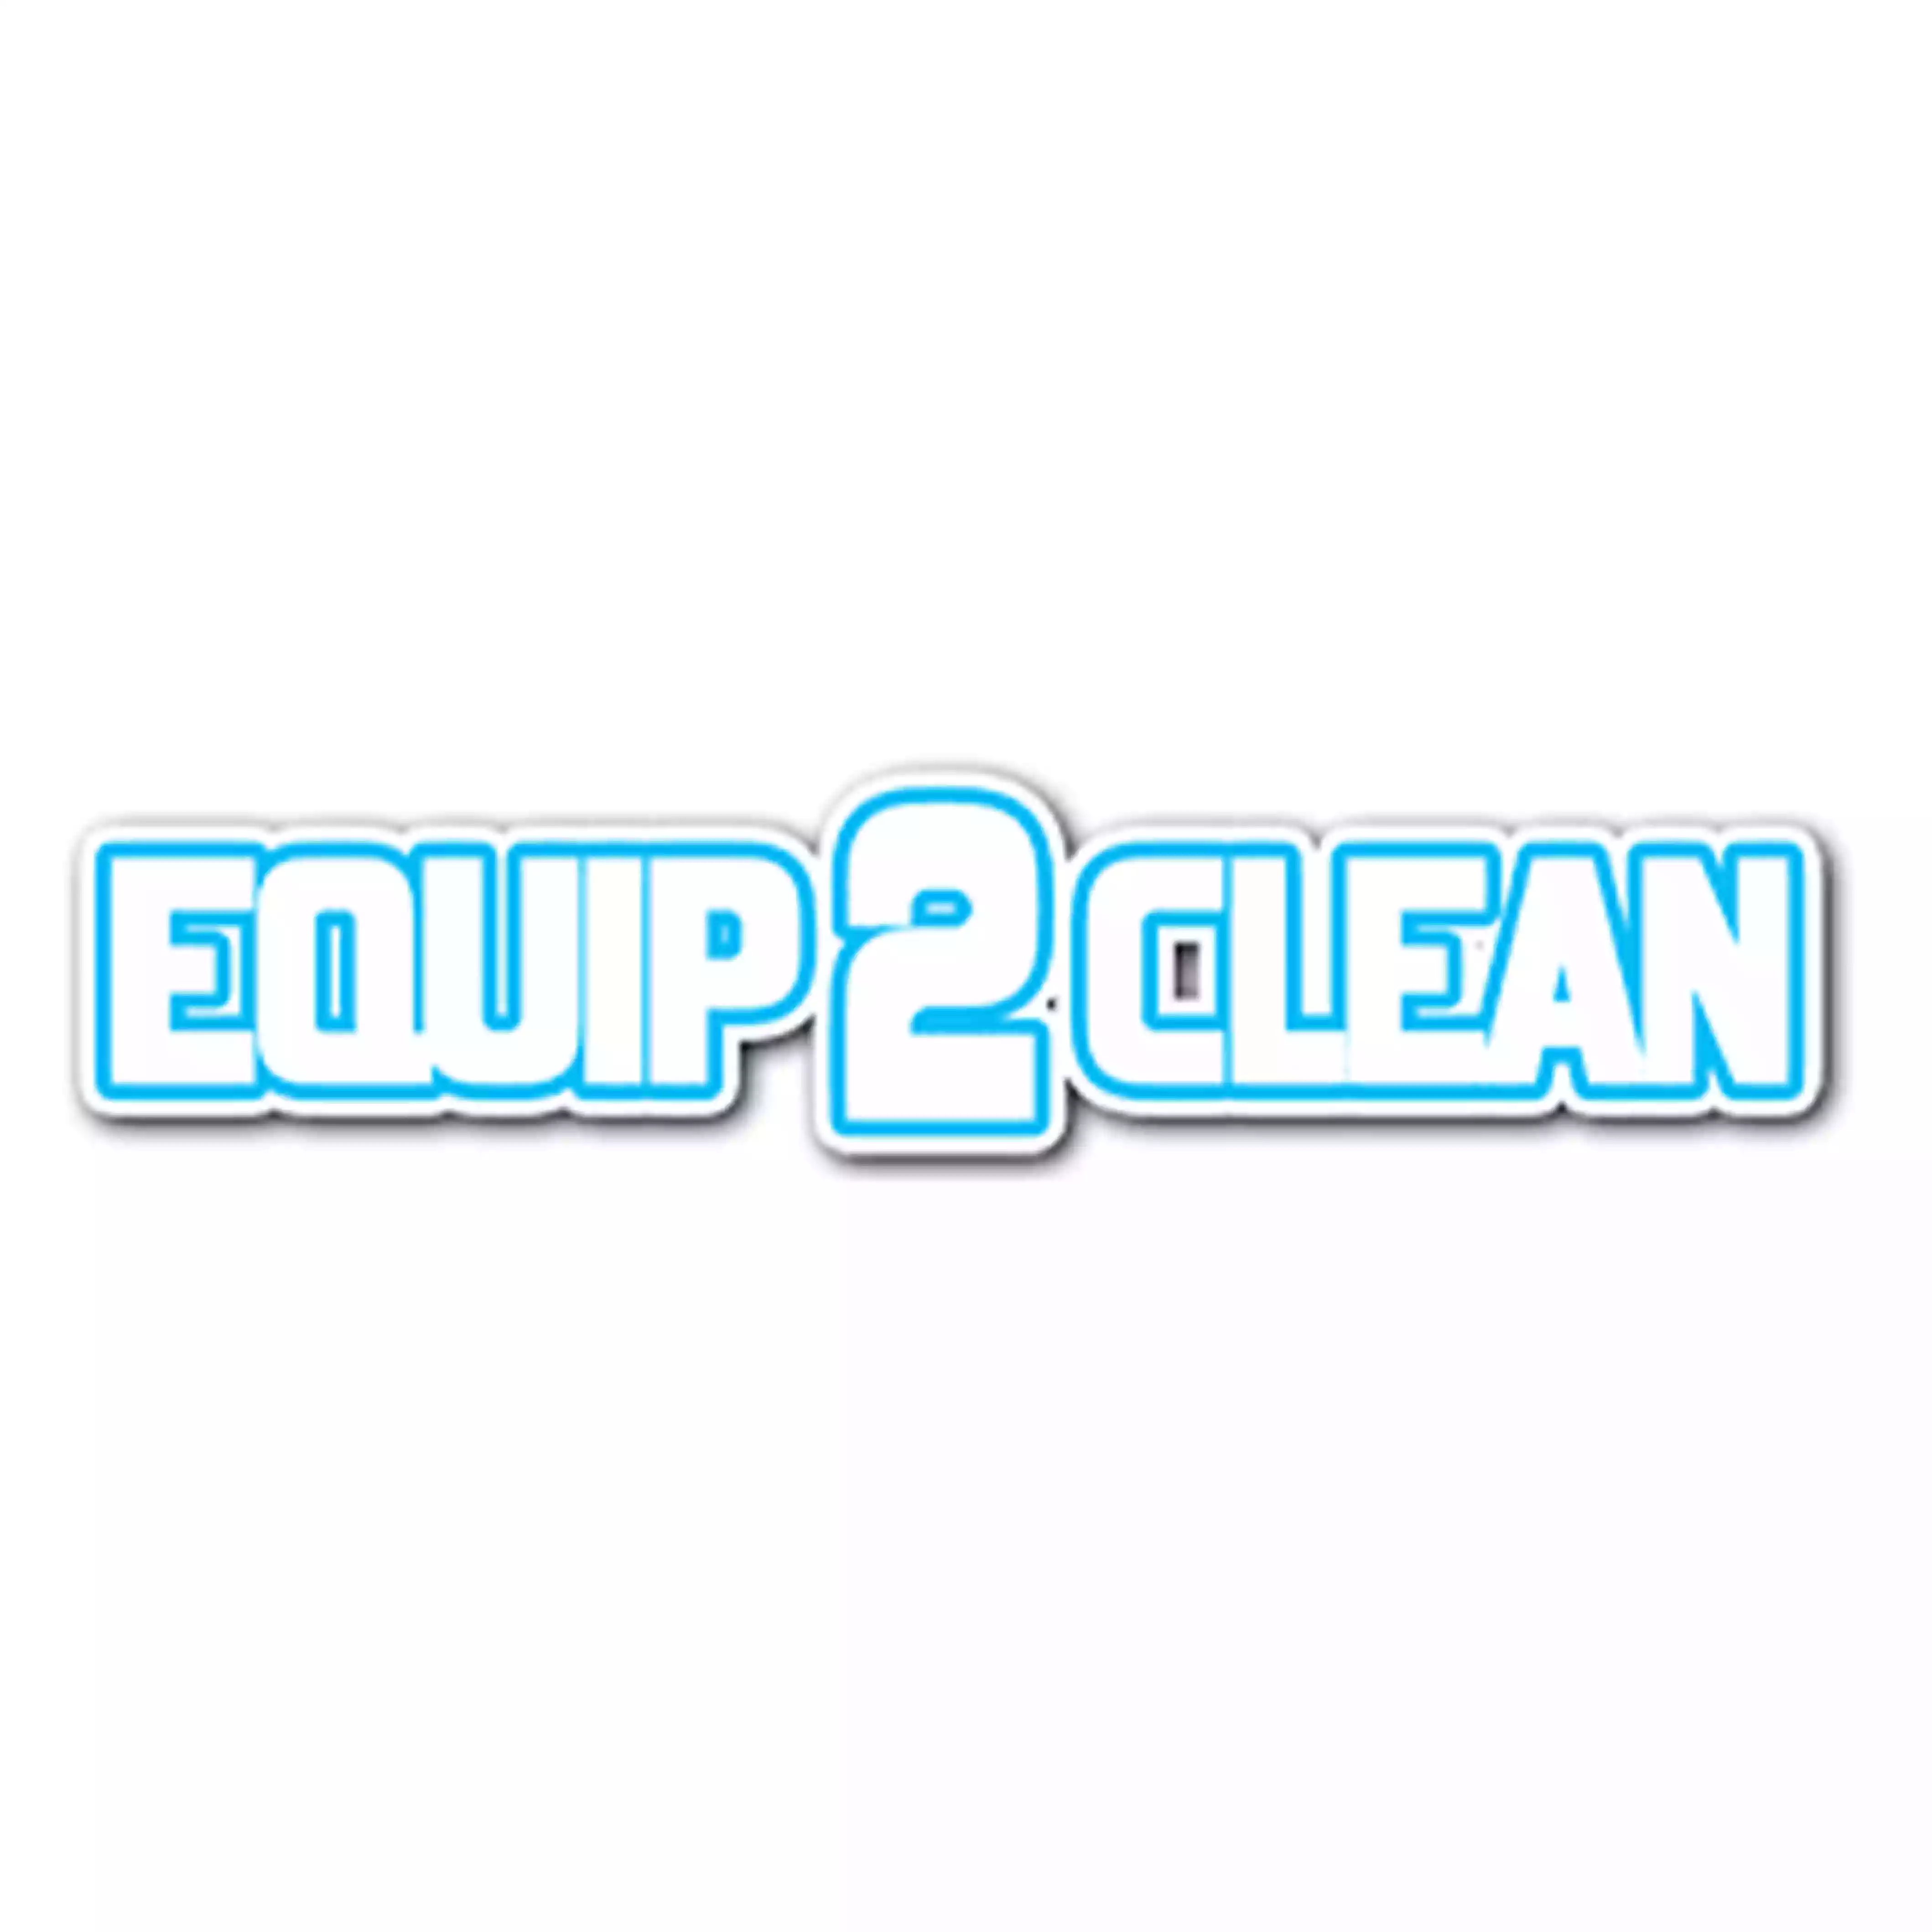 Equip2Clean